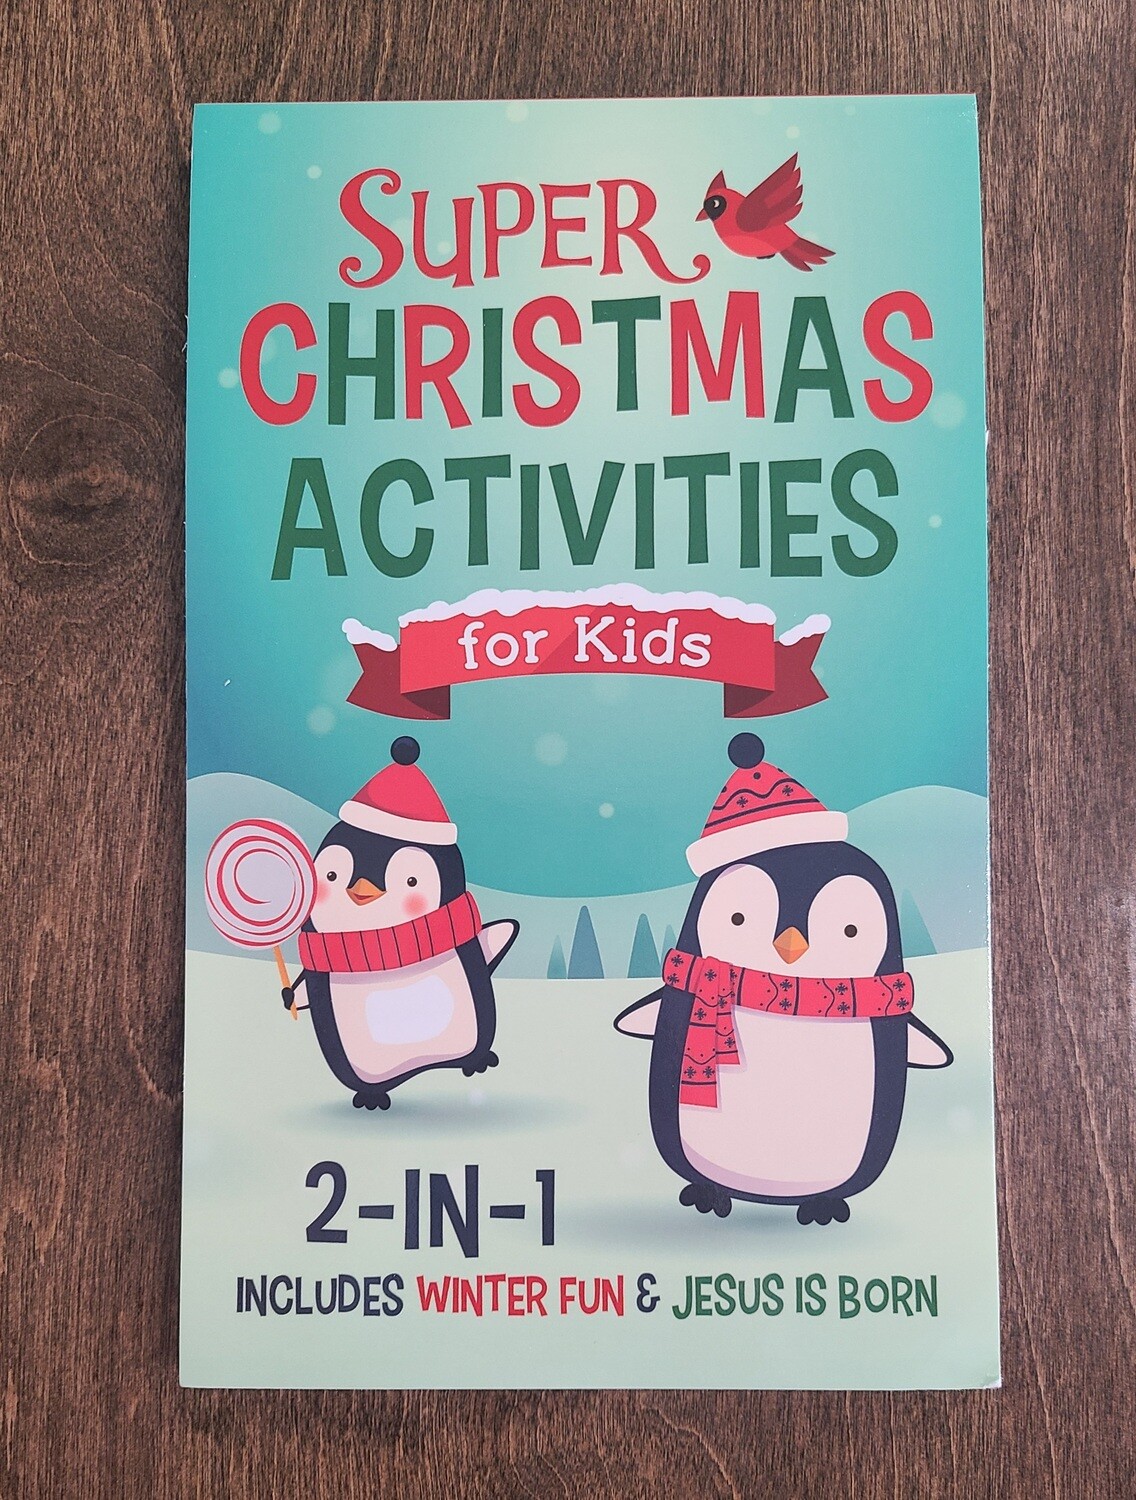 Super Christmas 2-In-1 Activities for Kids by Barbour Kidz